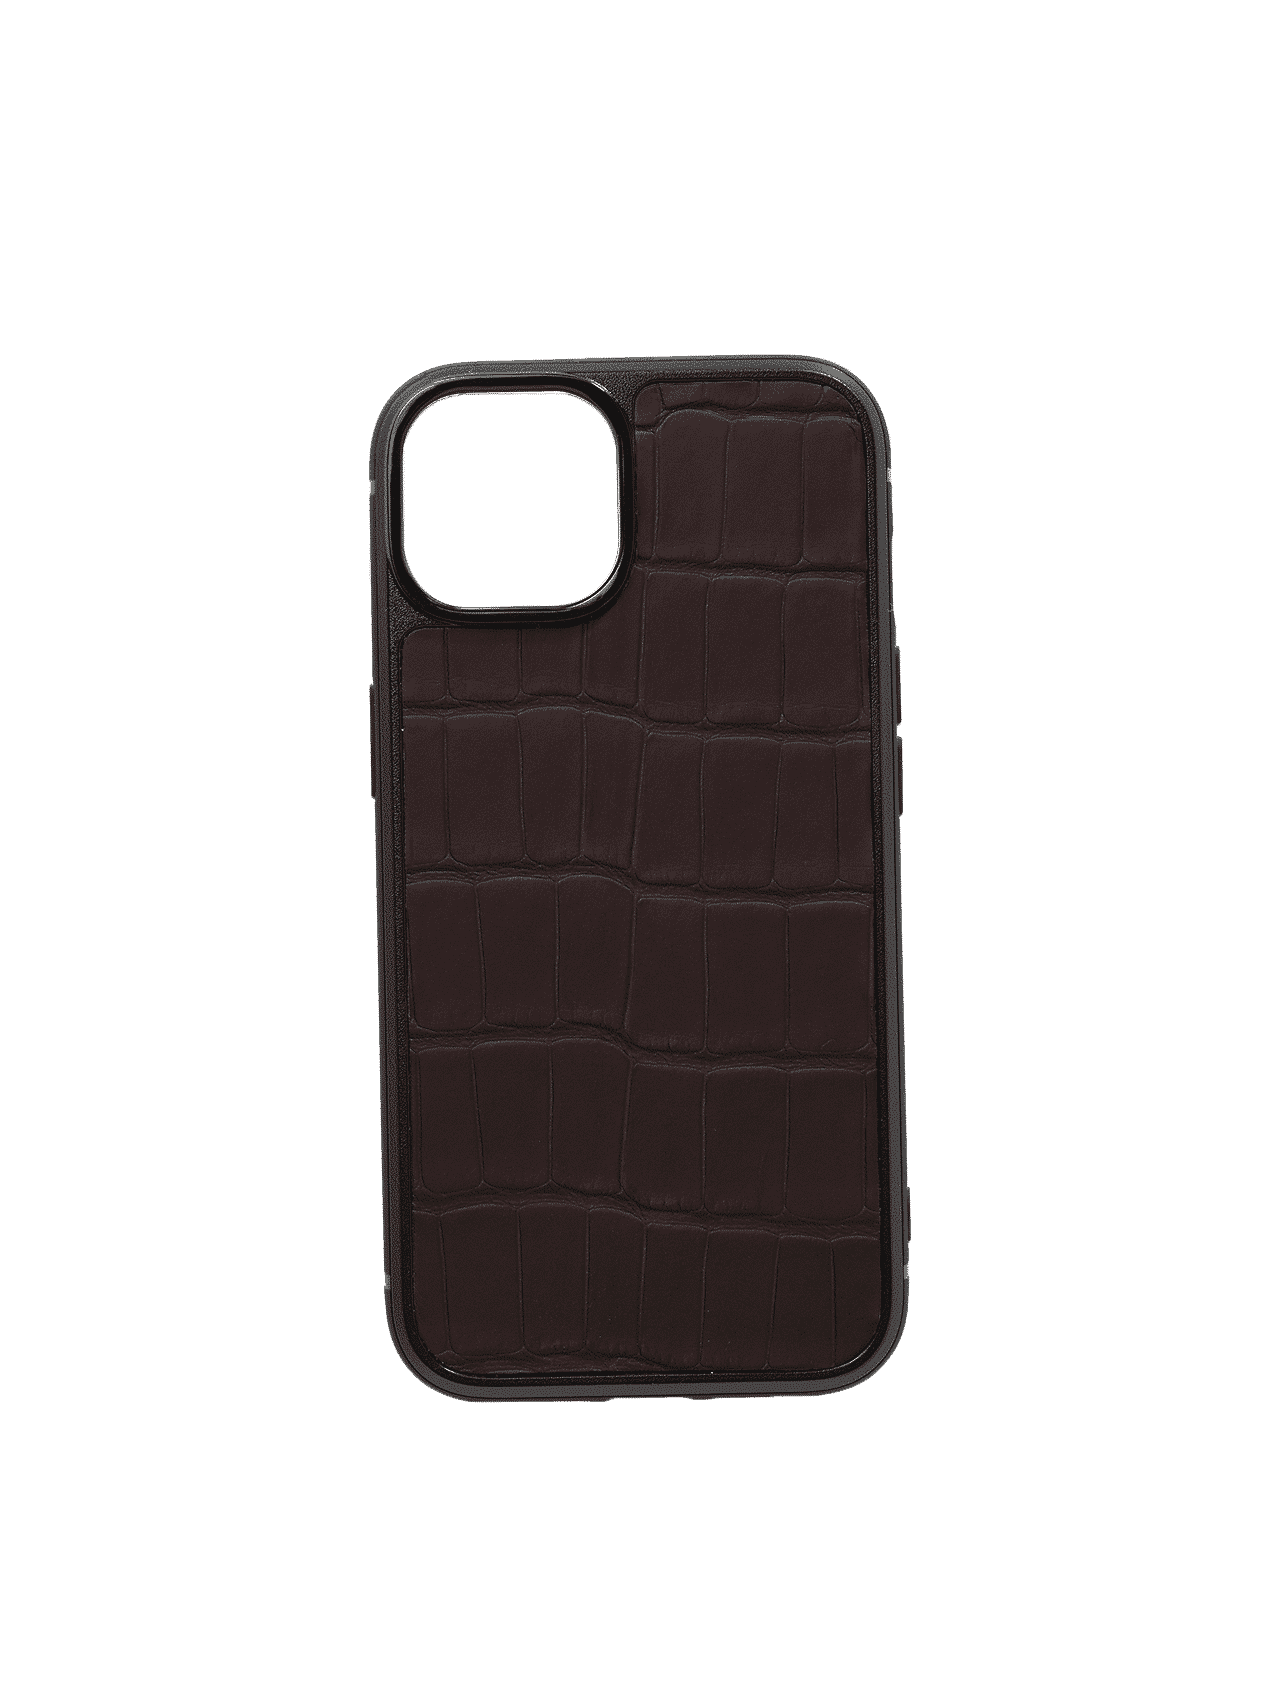 iphone case 14 leather crocodile brown